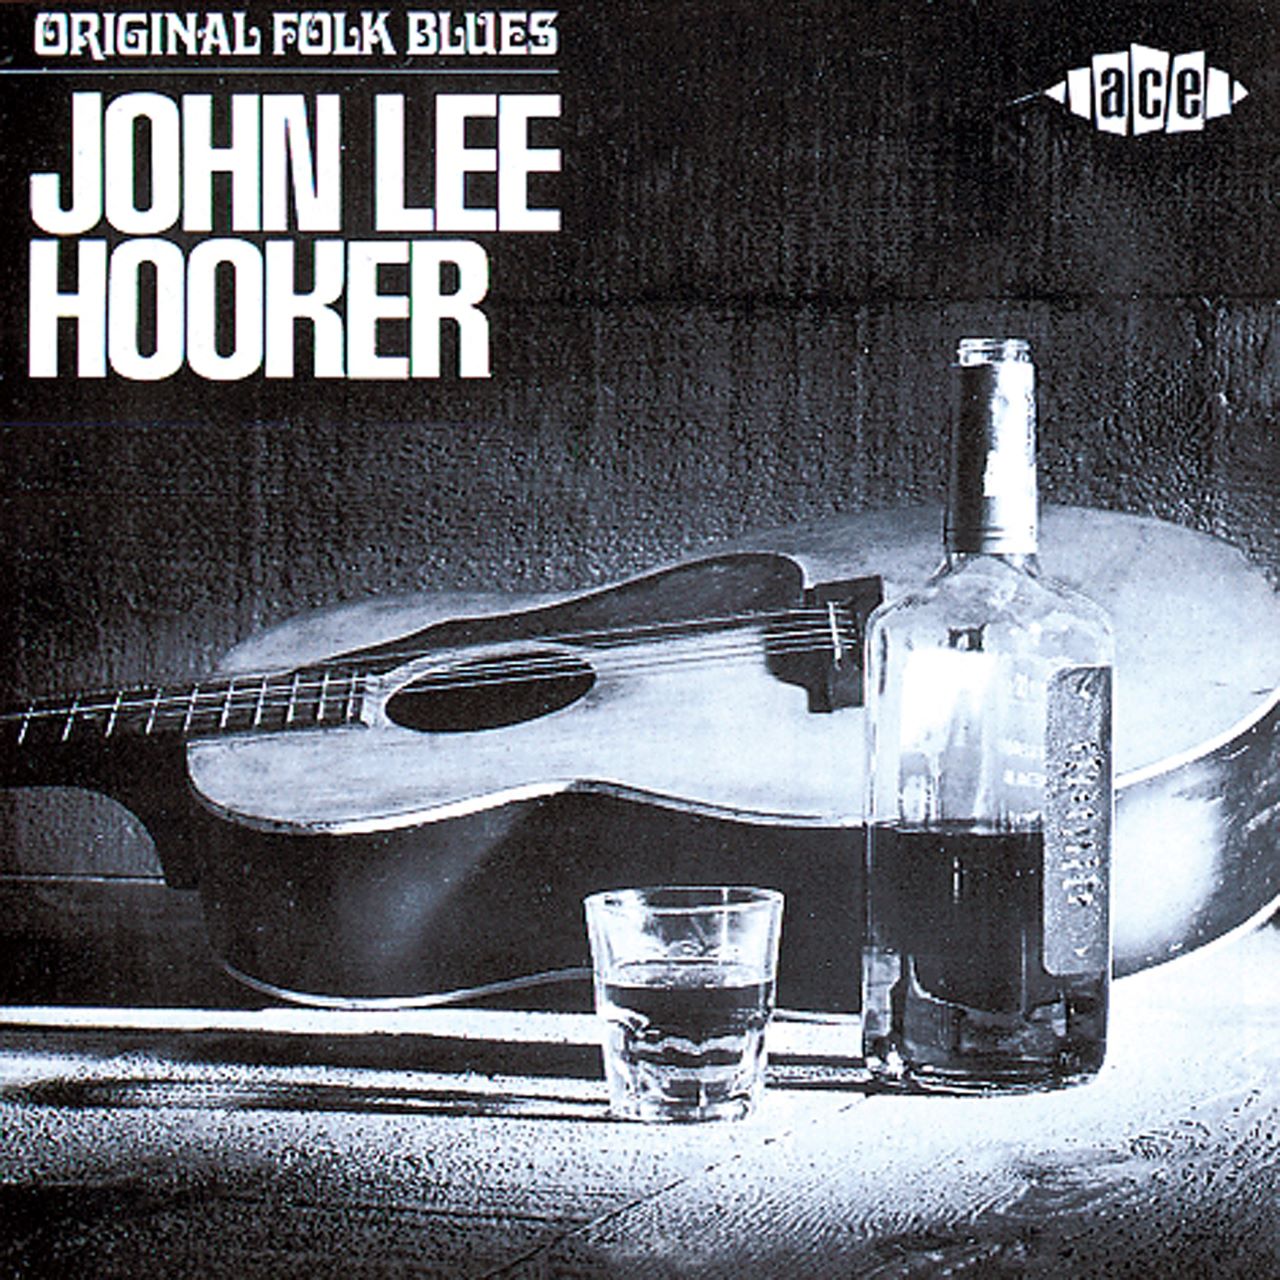 John Lee Hooker – Original Folk Blues cover album